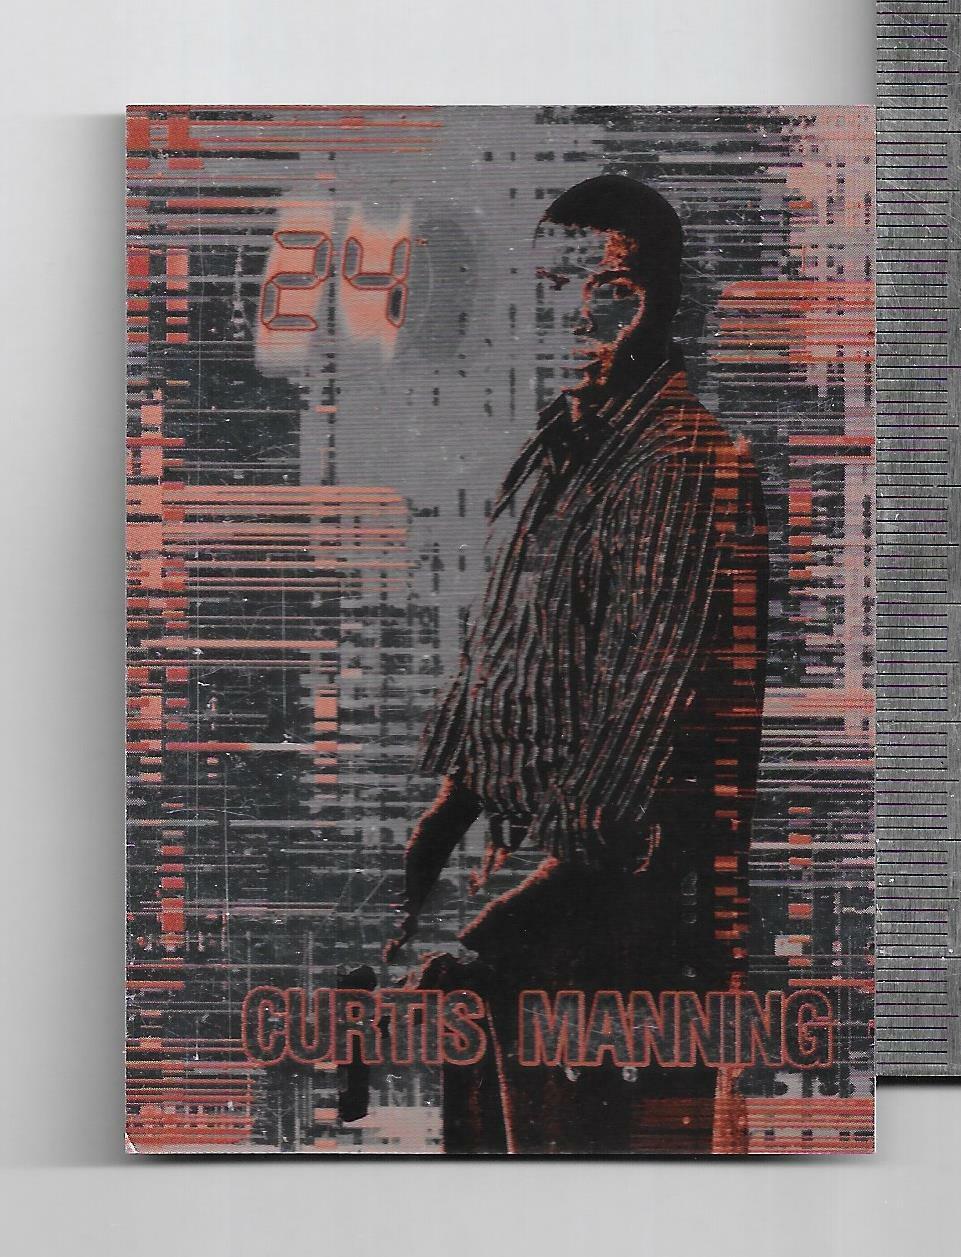 24 Season 4 Expansion Artbox -2007 Box Topper Card BT1 Curtis Manning 